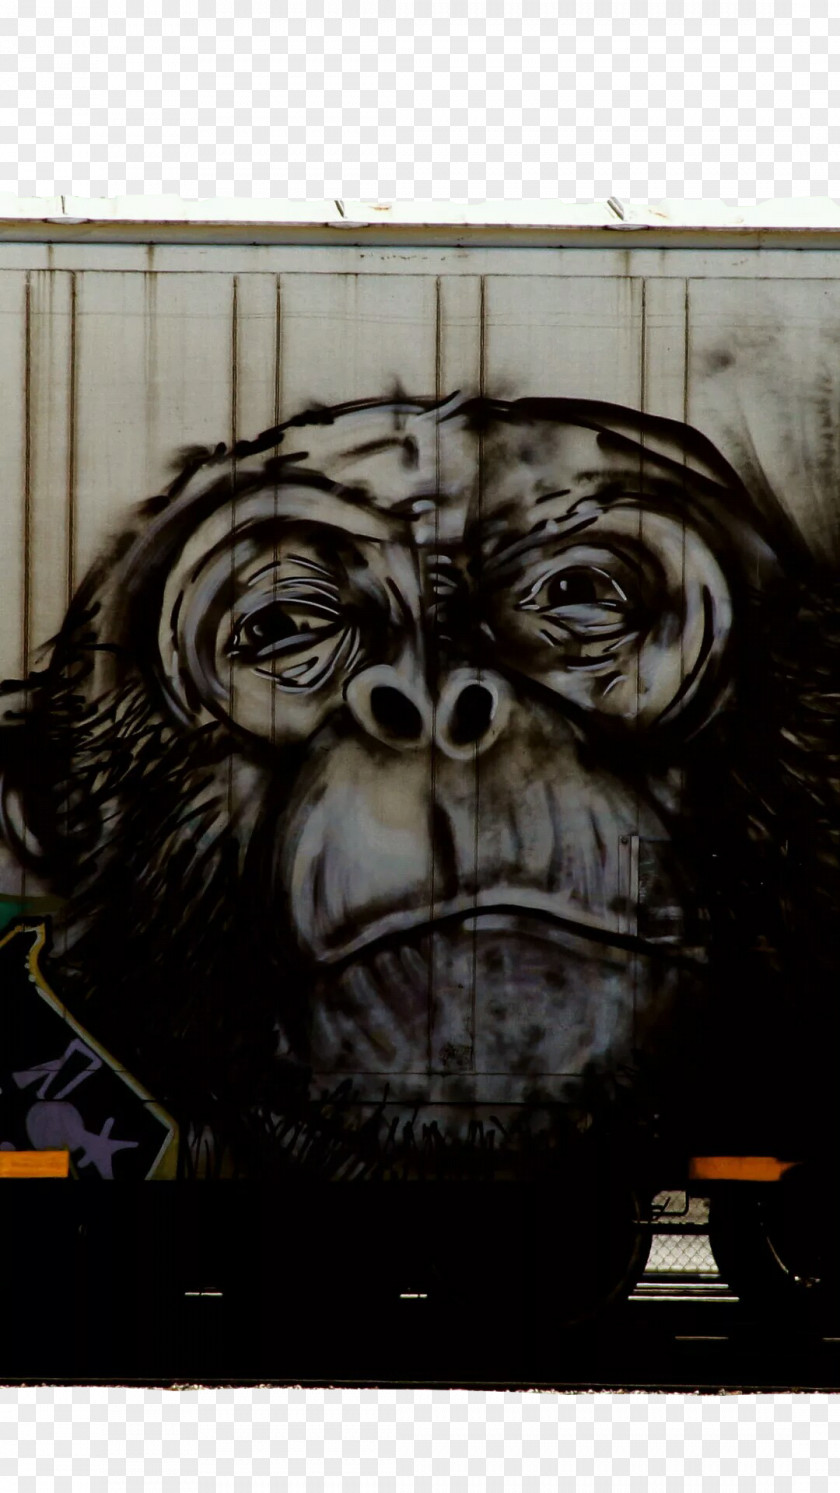 Monkey Graffiti On The Wall Freight Train Illustration PNG